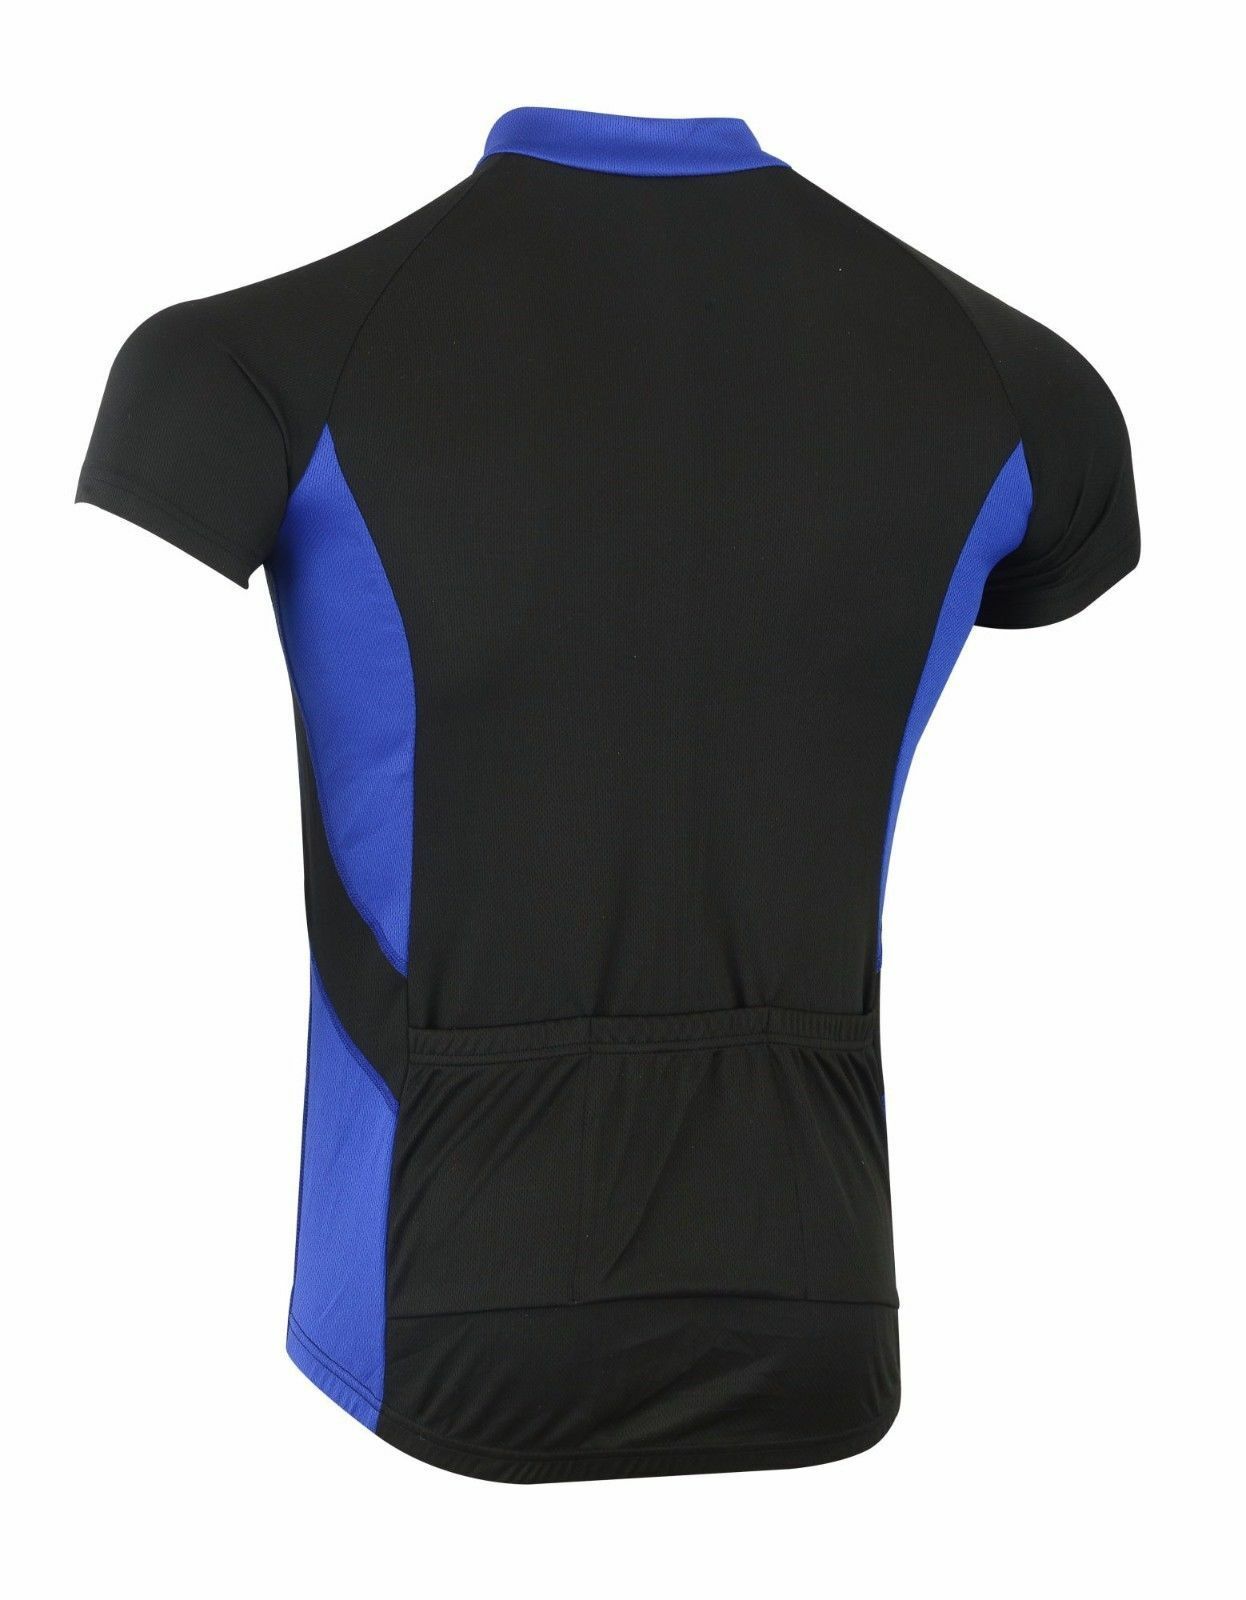 Mens Cycling Jersey Short Sleeves Black/Blue